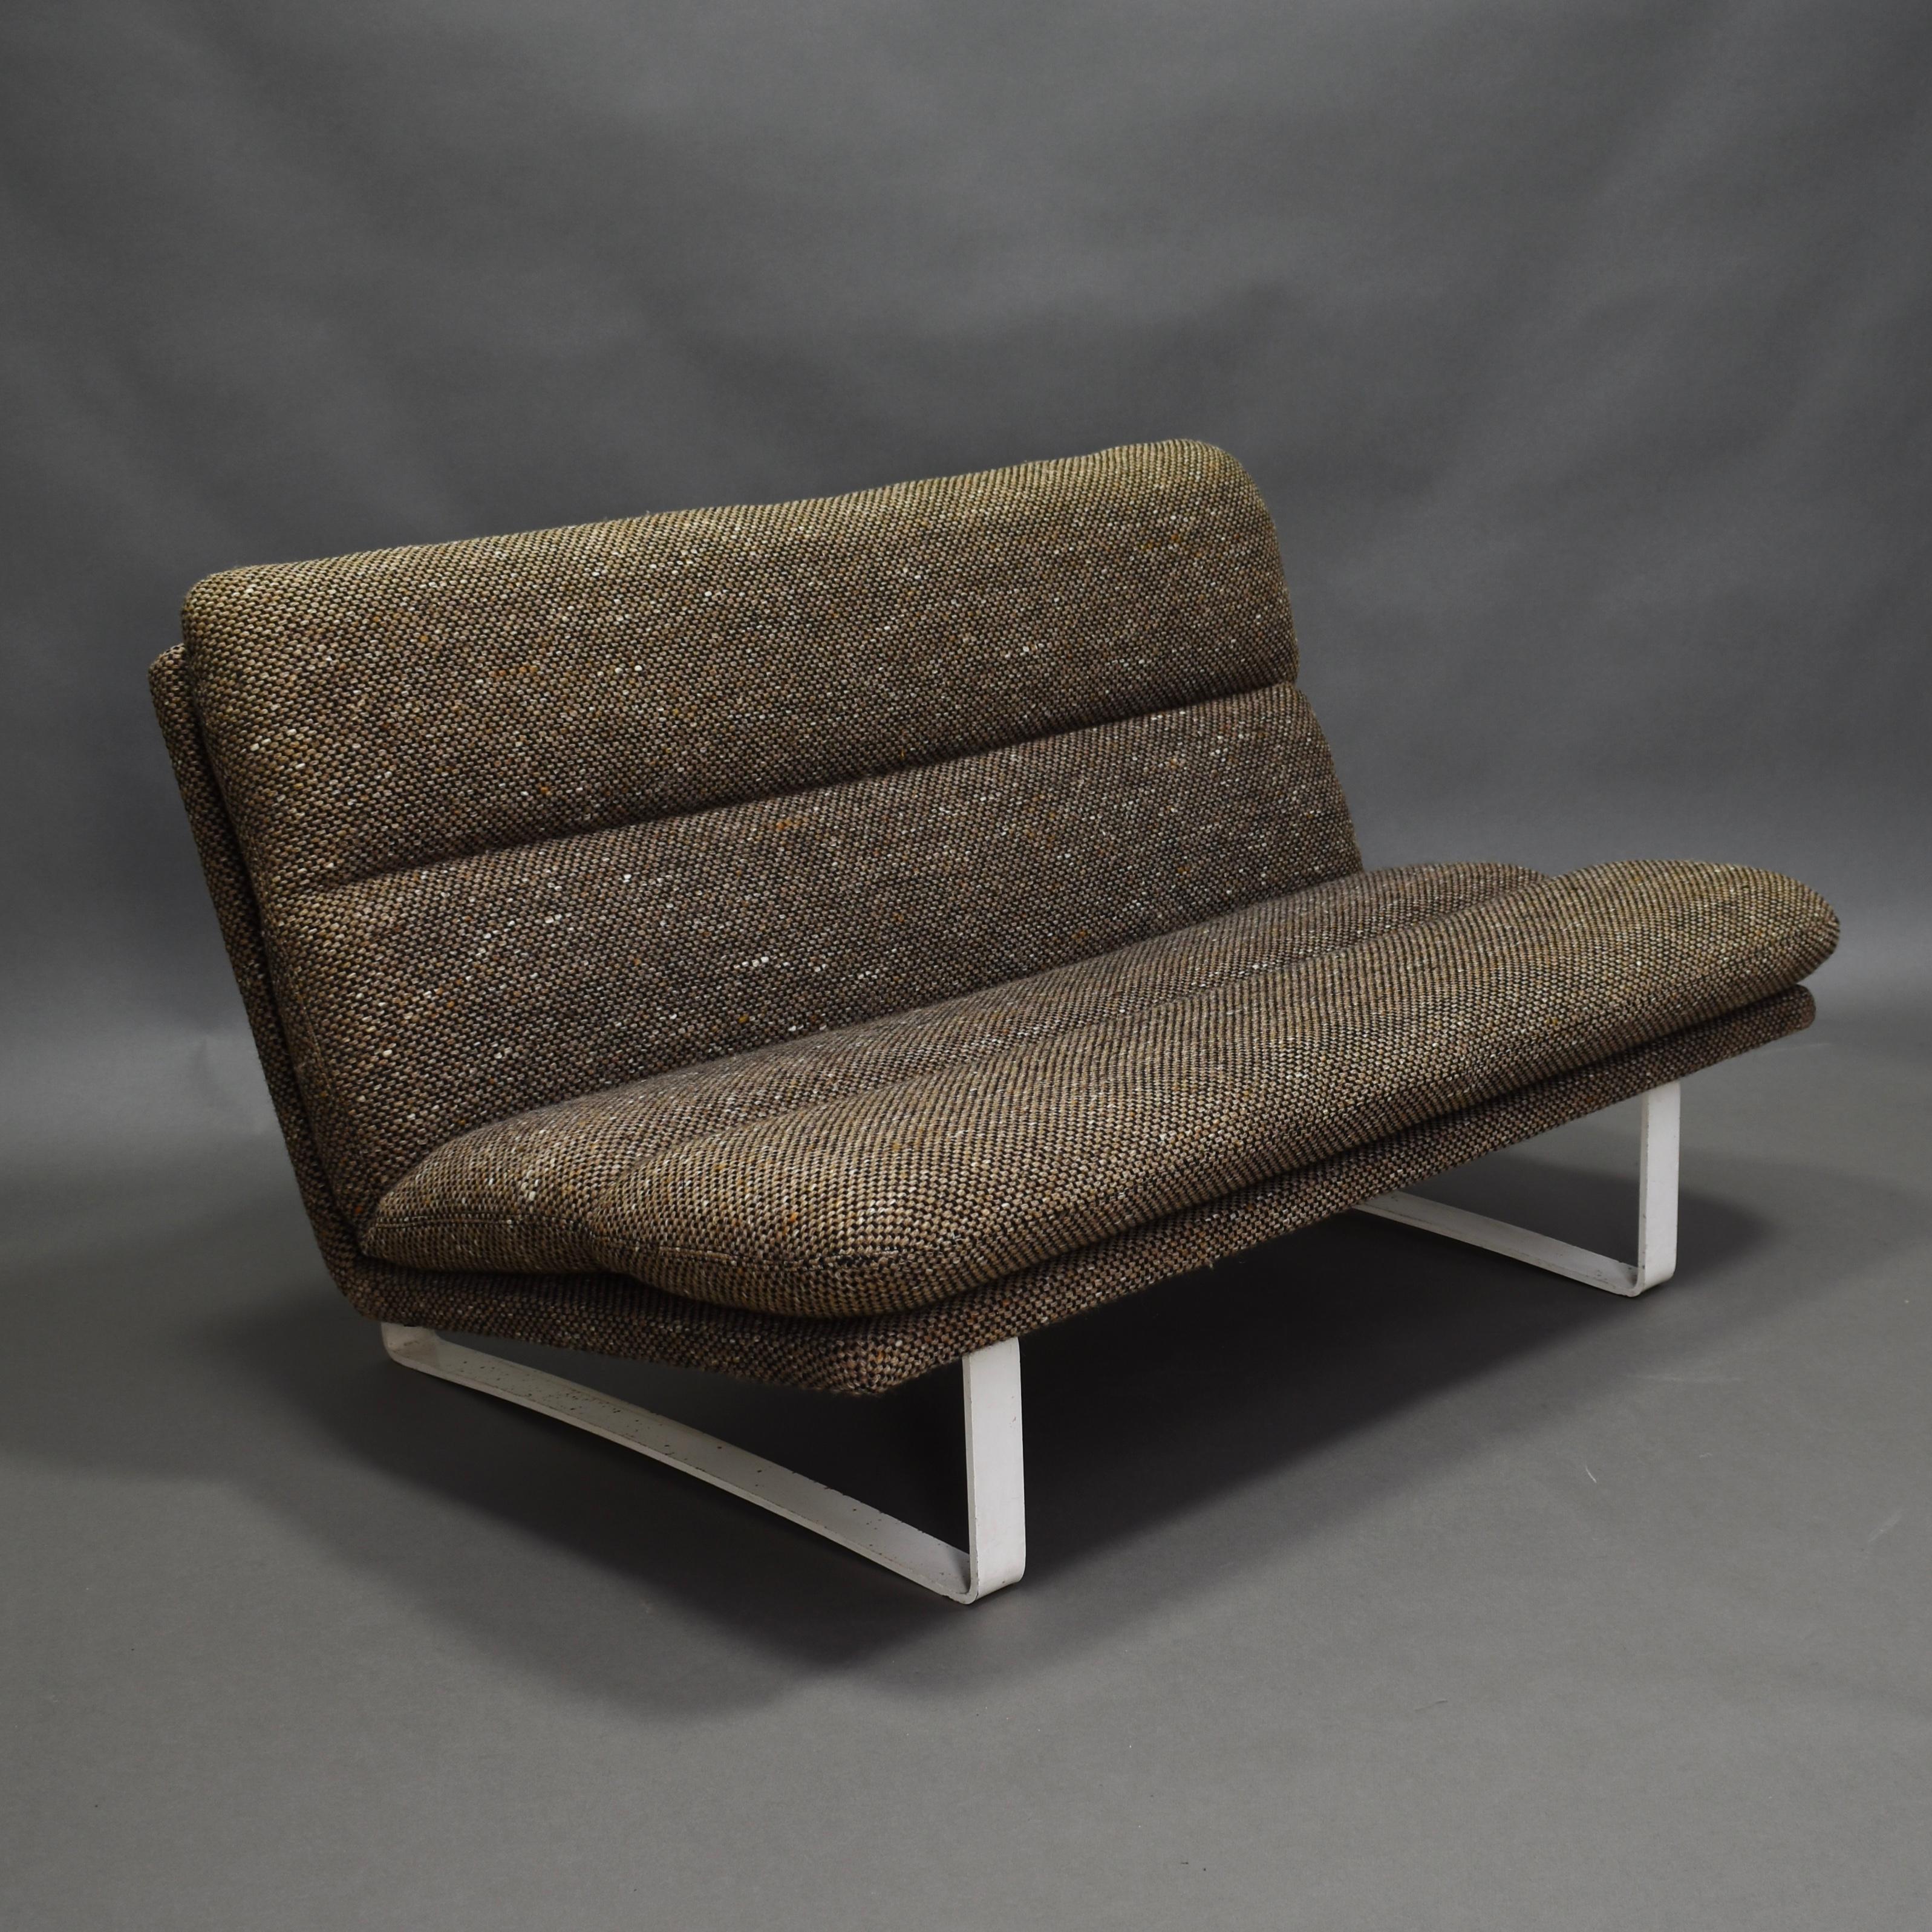 C682 sofa by Kho liang Ie for Artifort in original wool De Ploeg fabric, 1960s

Designer: Kho Liang Ie

Manufacturer: Artifort

Country: Netherlands

Model: C682 sofa

Design period: circa 1960s

Date of manufacturing: circa